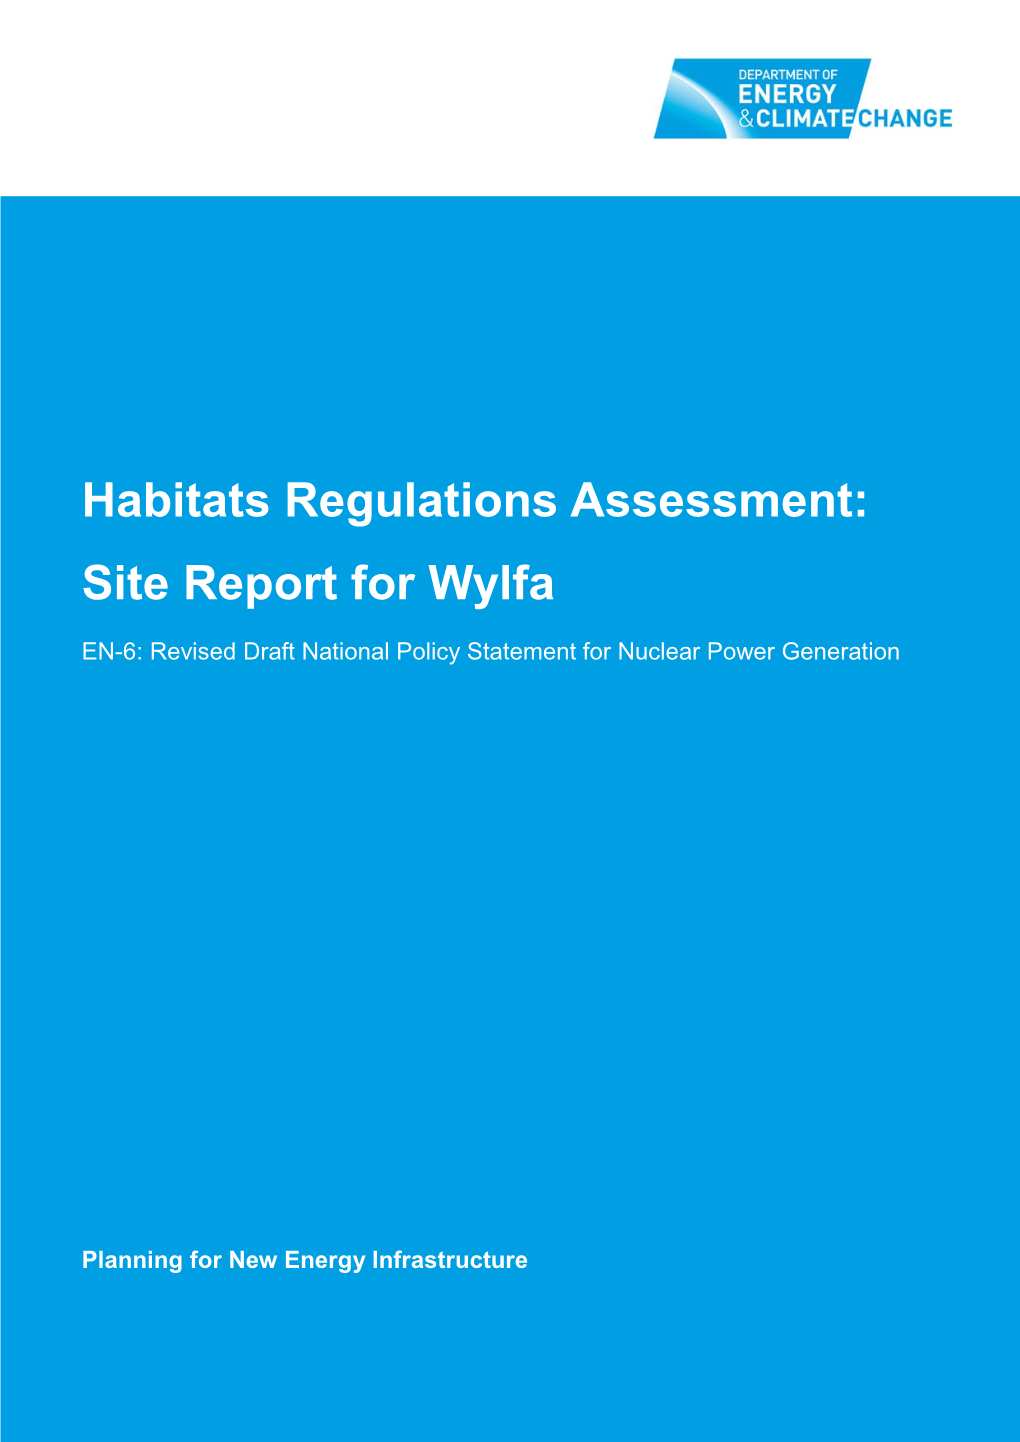 Habitats Regulations Assessment Site Report for Wylfa